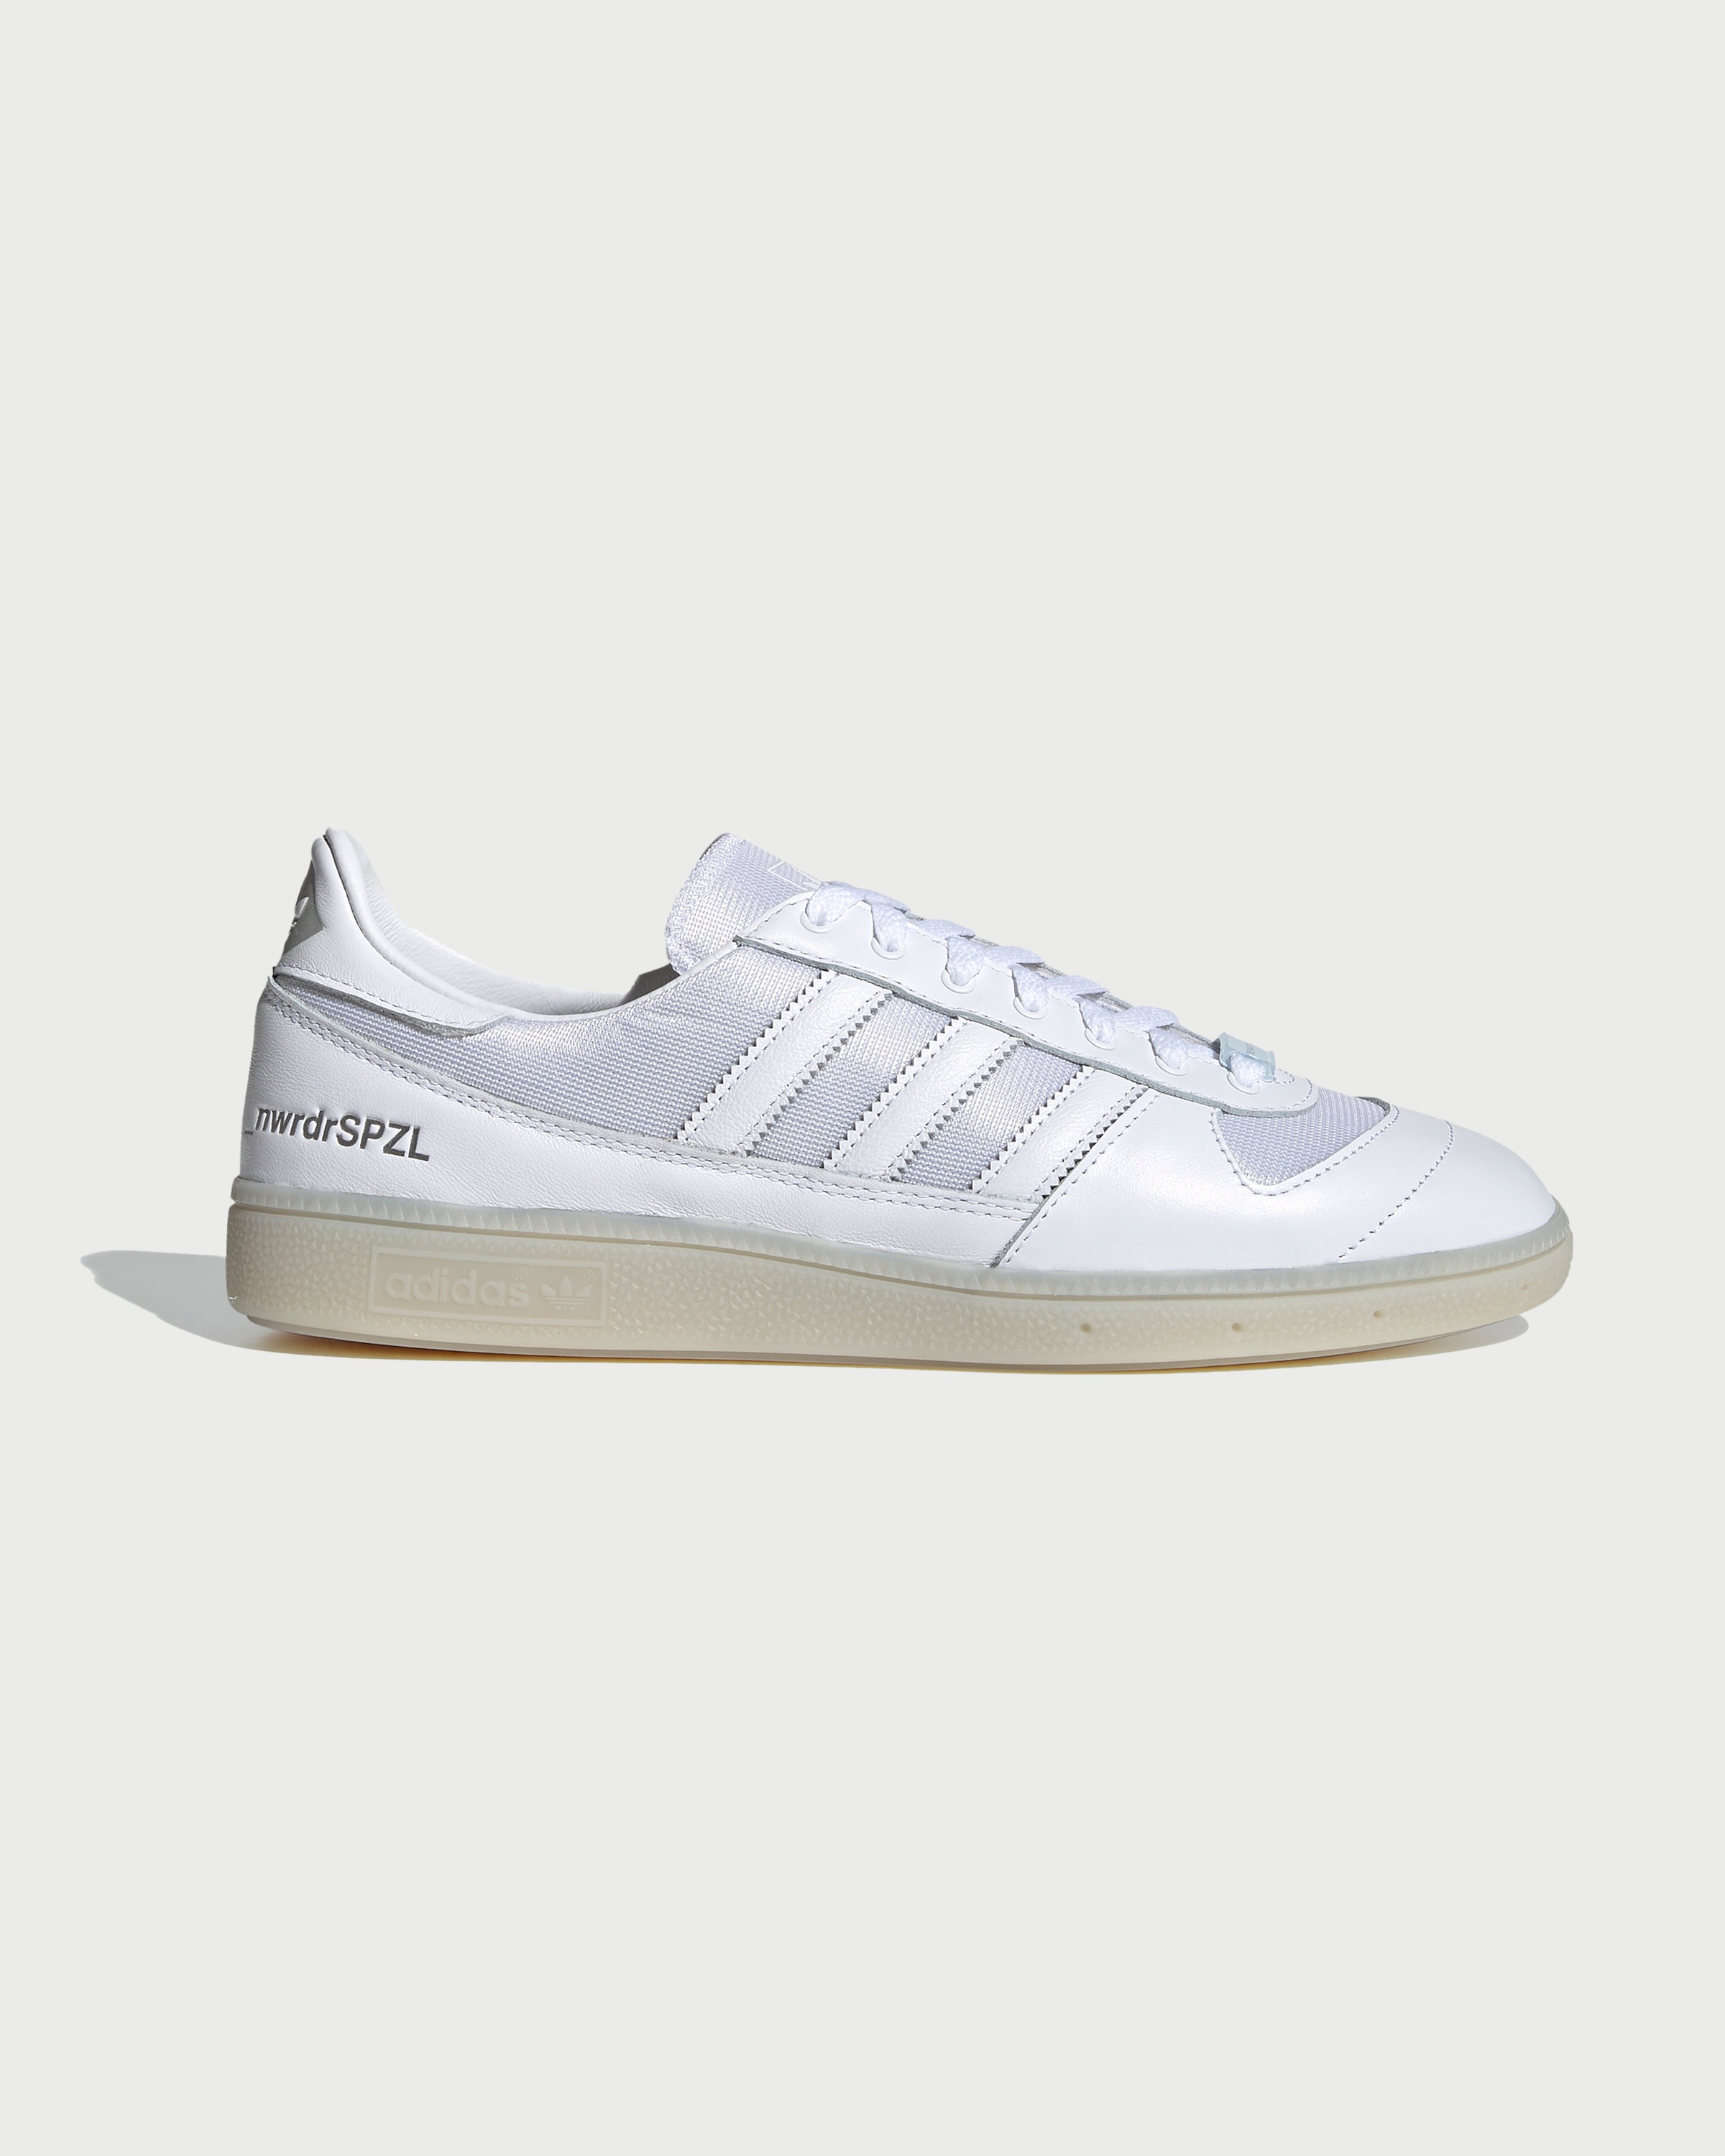 Adidas – Wilsy Spezial x New Order White - Low Top Sneakers - White - Image 1